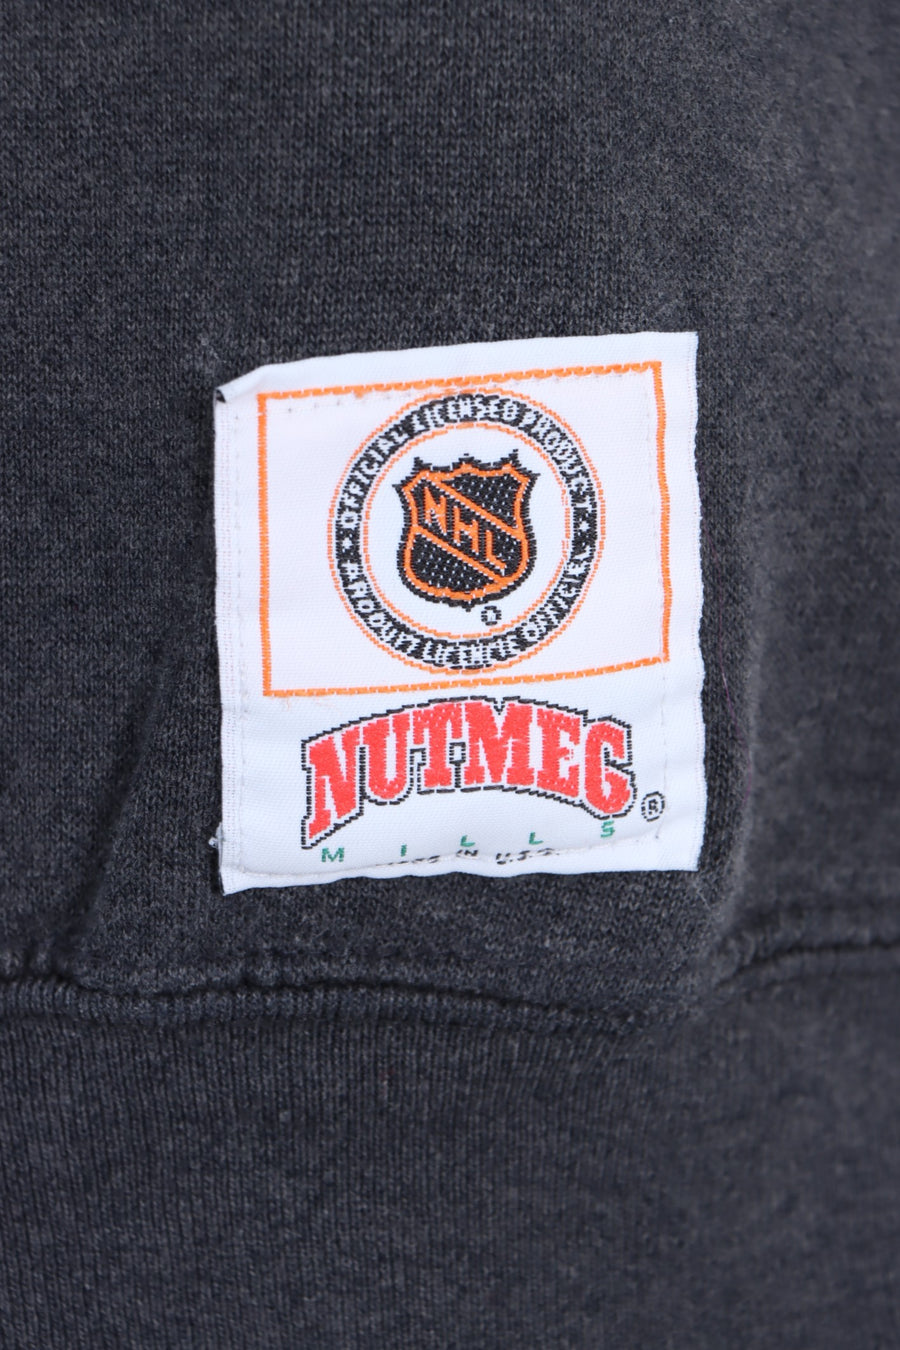 NHL Los Angeles Kings "Kick Ice" NUTMEG Sweatshirt USA Made (XL)